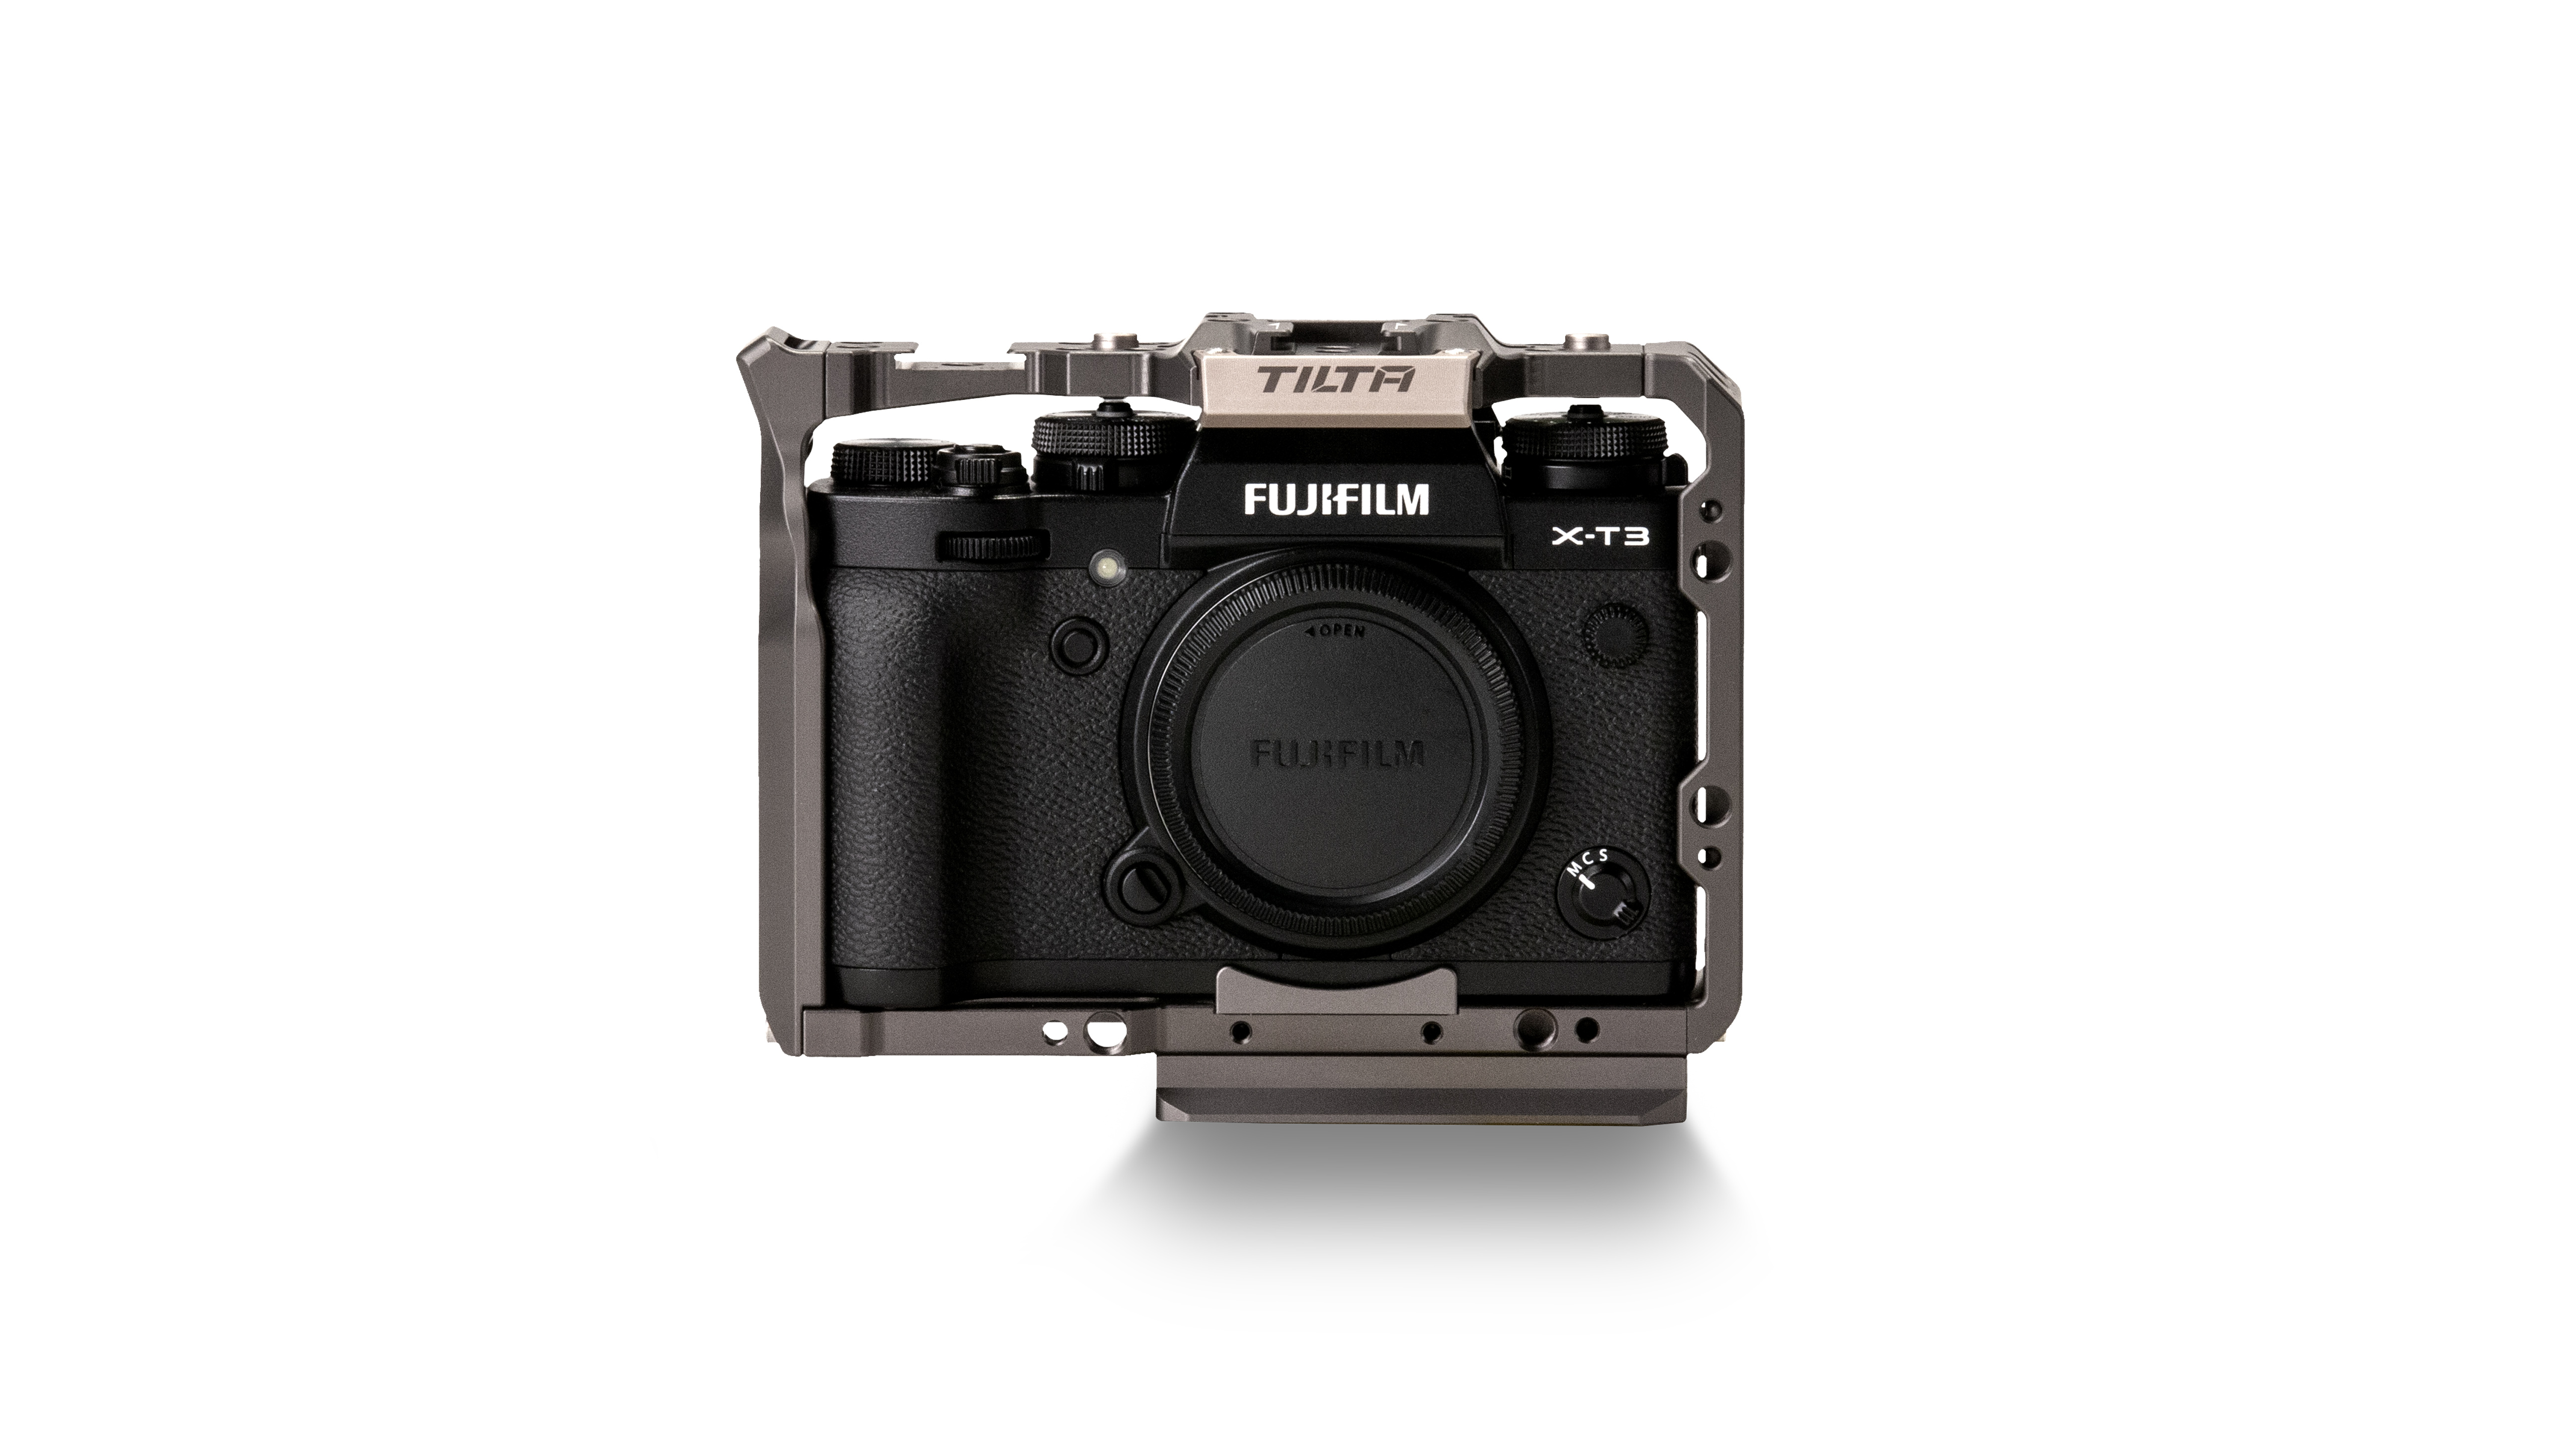 Cataract Riskant vals Full Camera Cage for Fujifilm X-T3 | Tilta